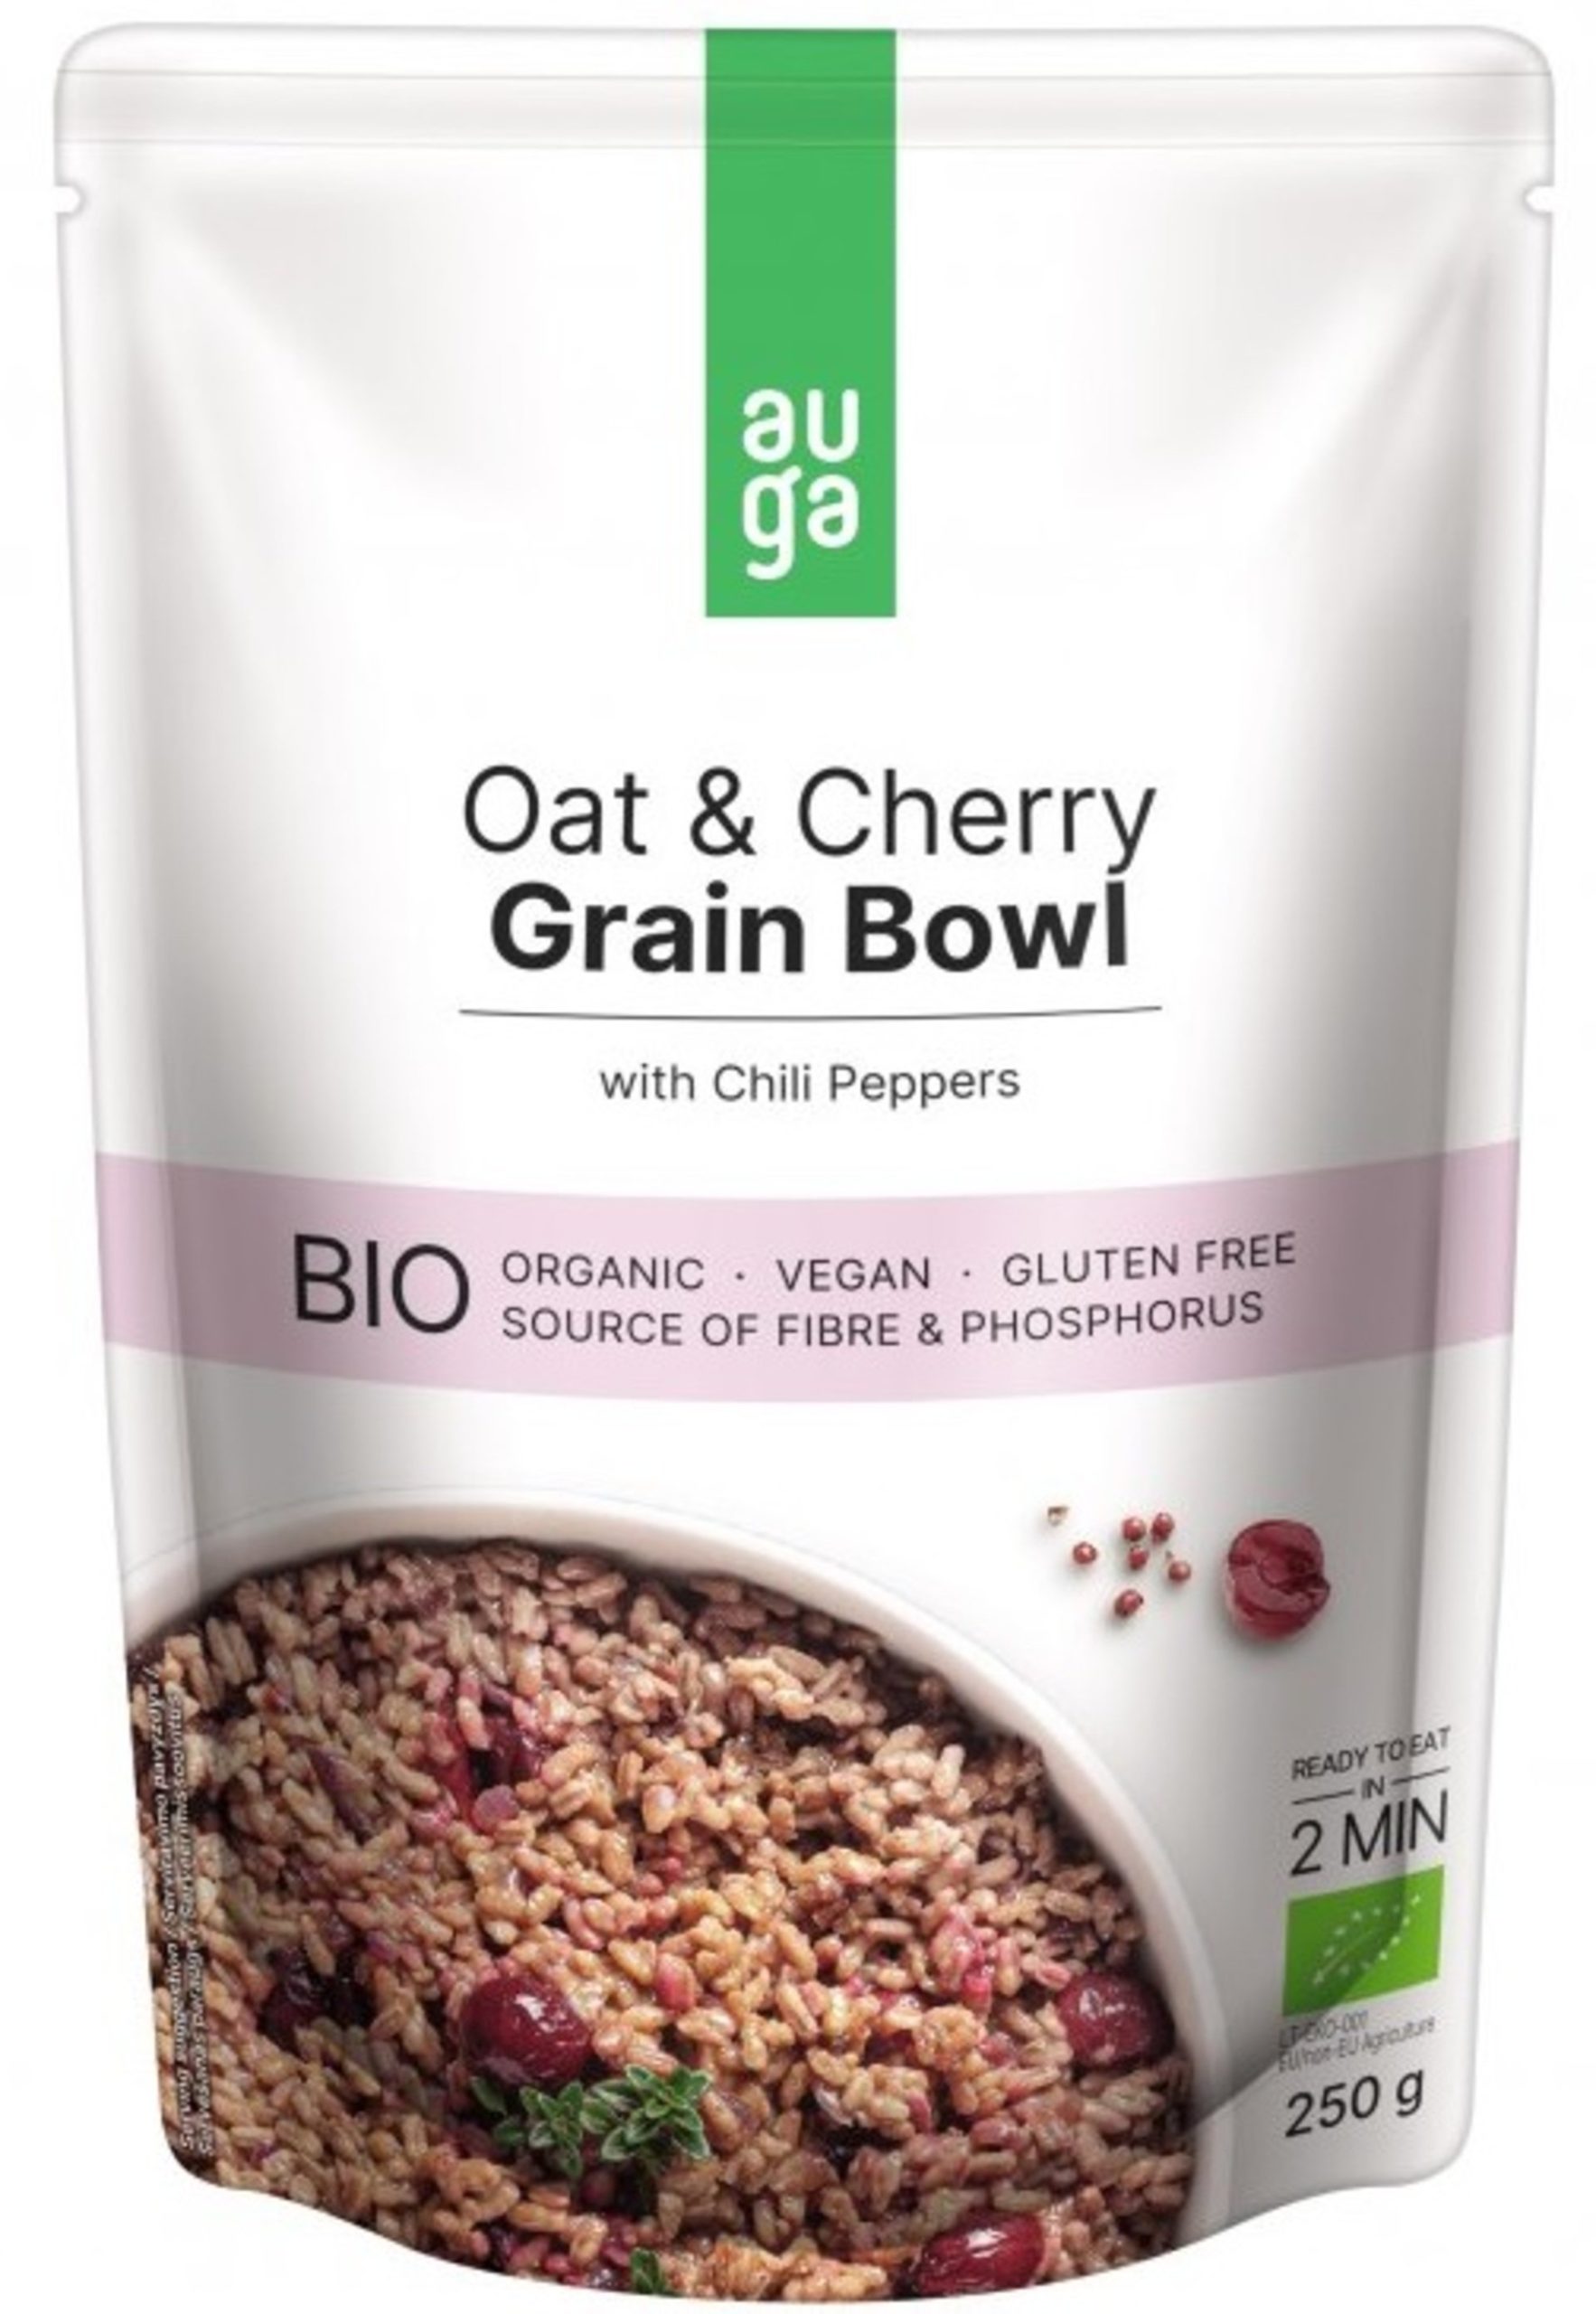 1257_auga-grain-bowl-eu-oat-cherry-250g-copy